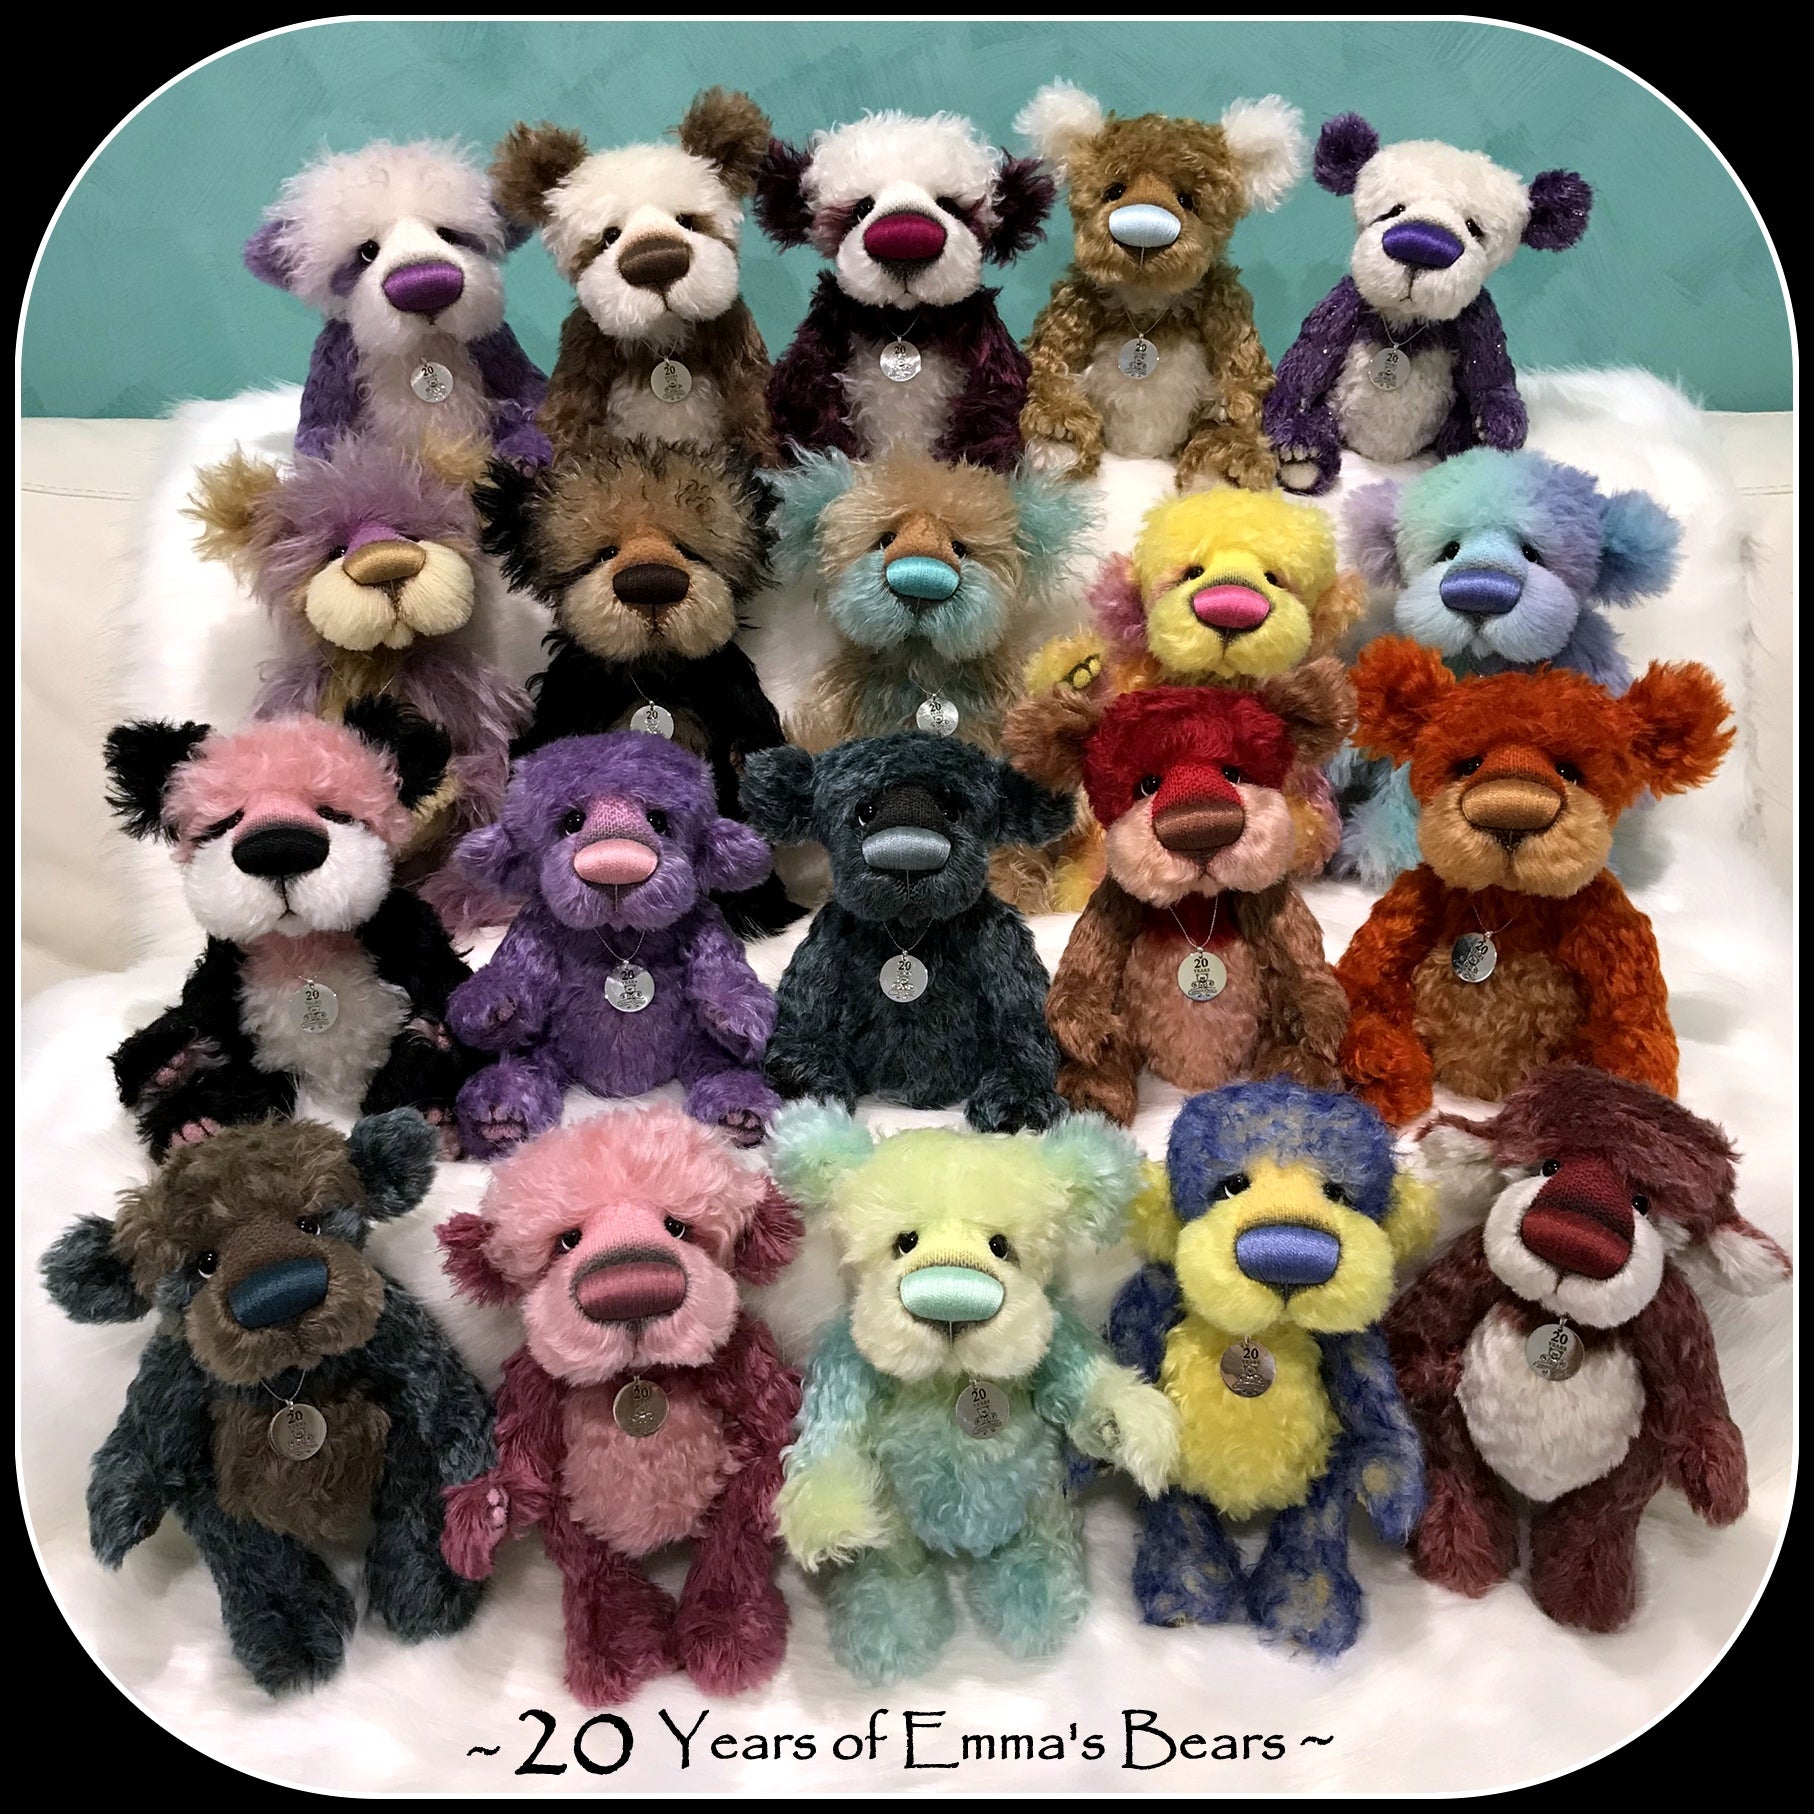 Quest - 20 Years of Emma's Bears Commemorative Teddy - OOAK in a series